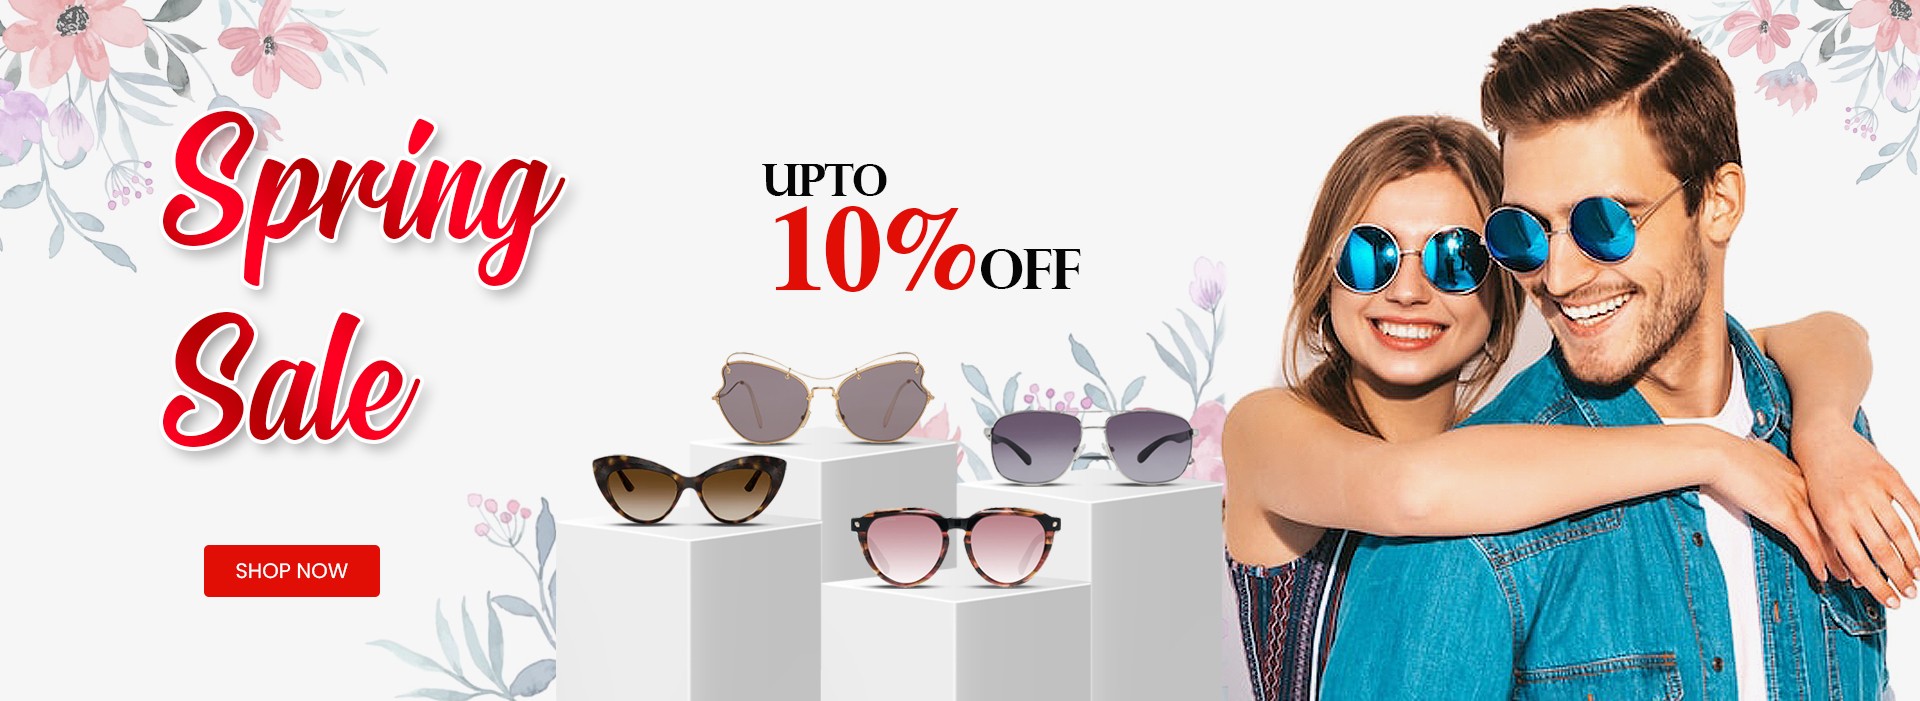 Spring sale upto 10% off on sunglasses